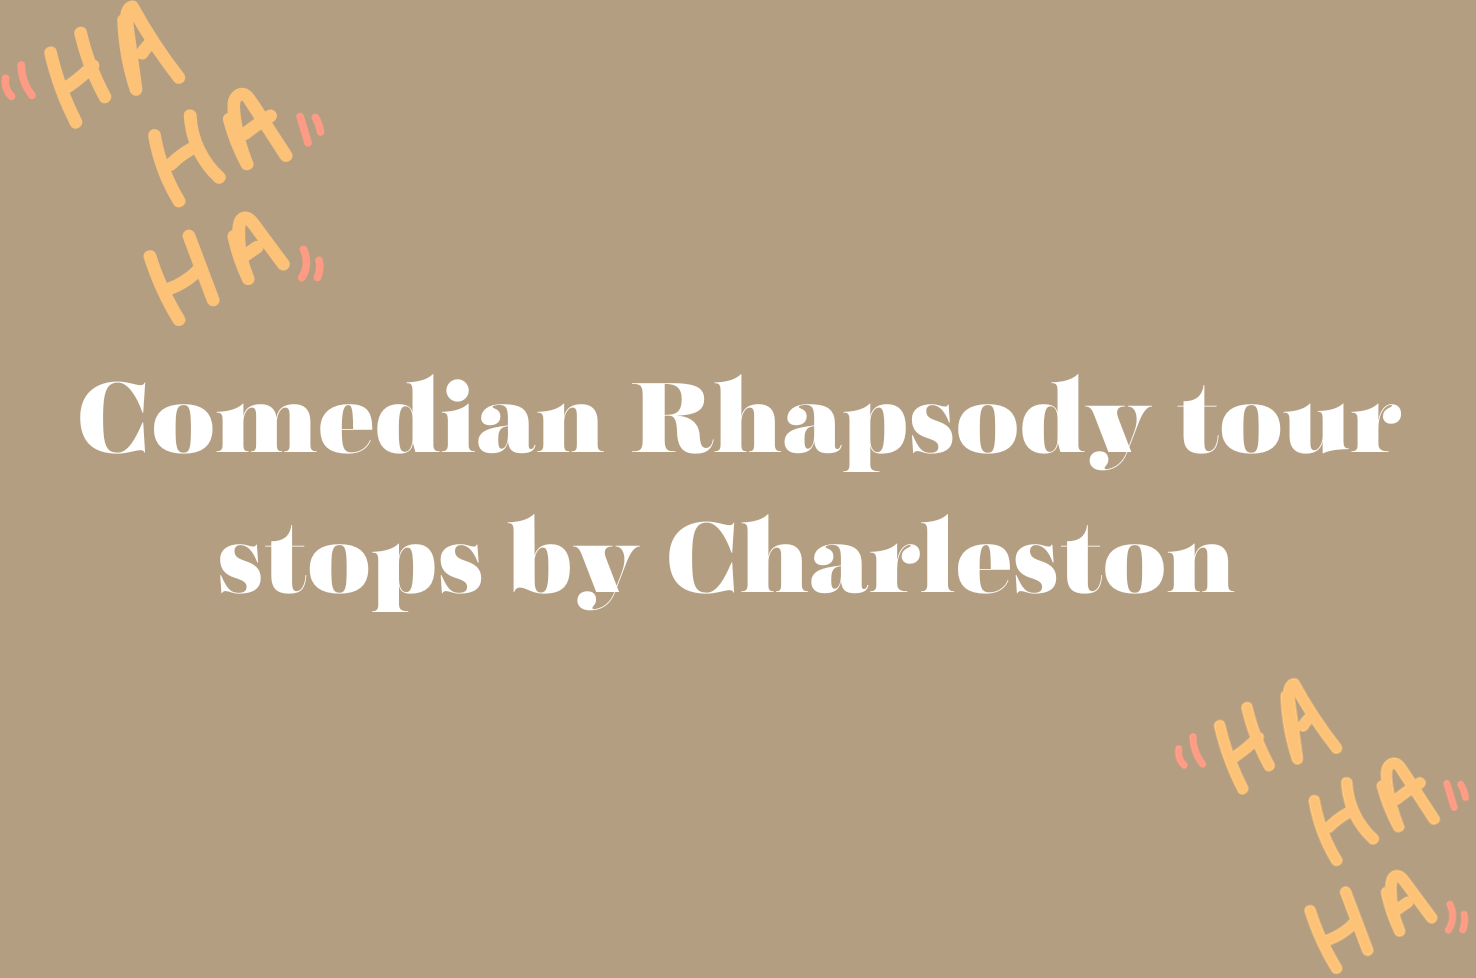 Comedian Rhapsody tour stops by Charleston